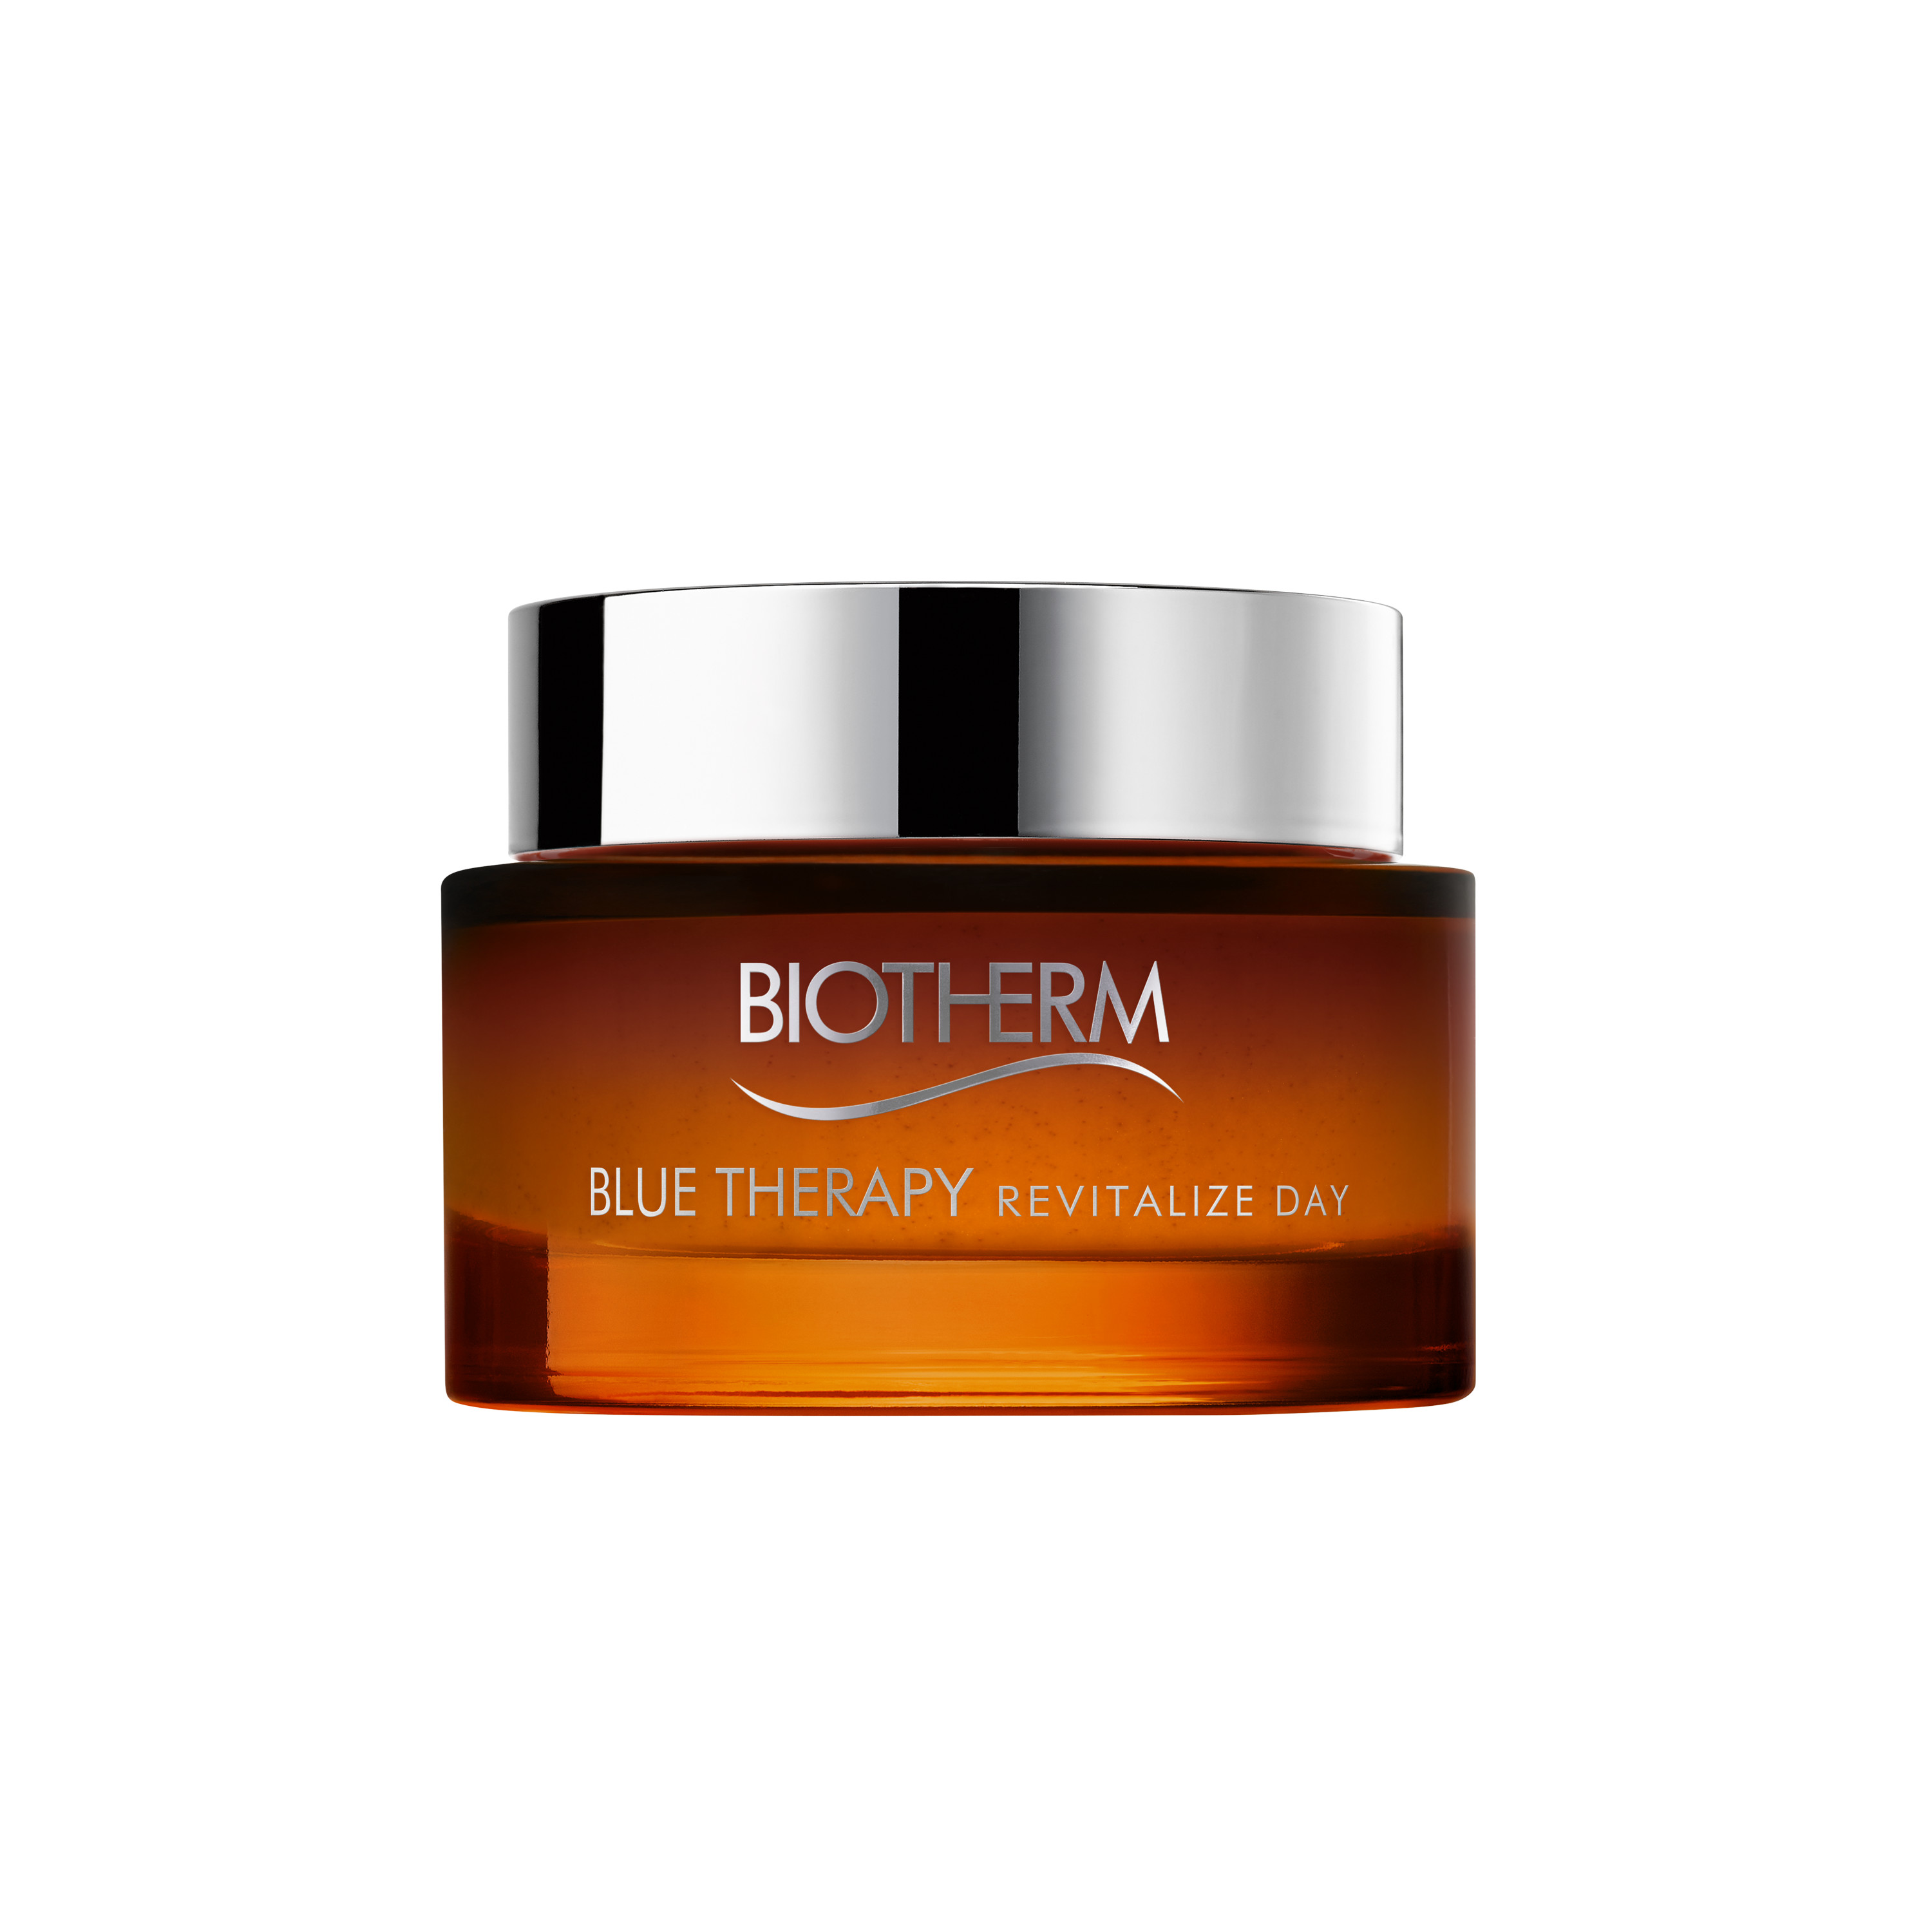 Compra Biotherm Blue Therapy Red Revitalize Day 75ml de la marca BIOTHERM al mejor precio